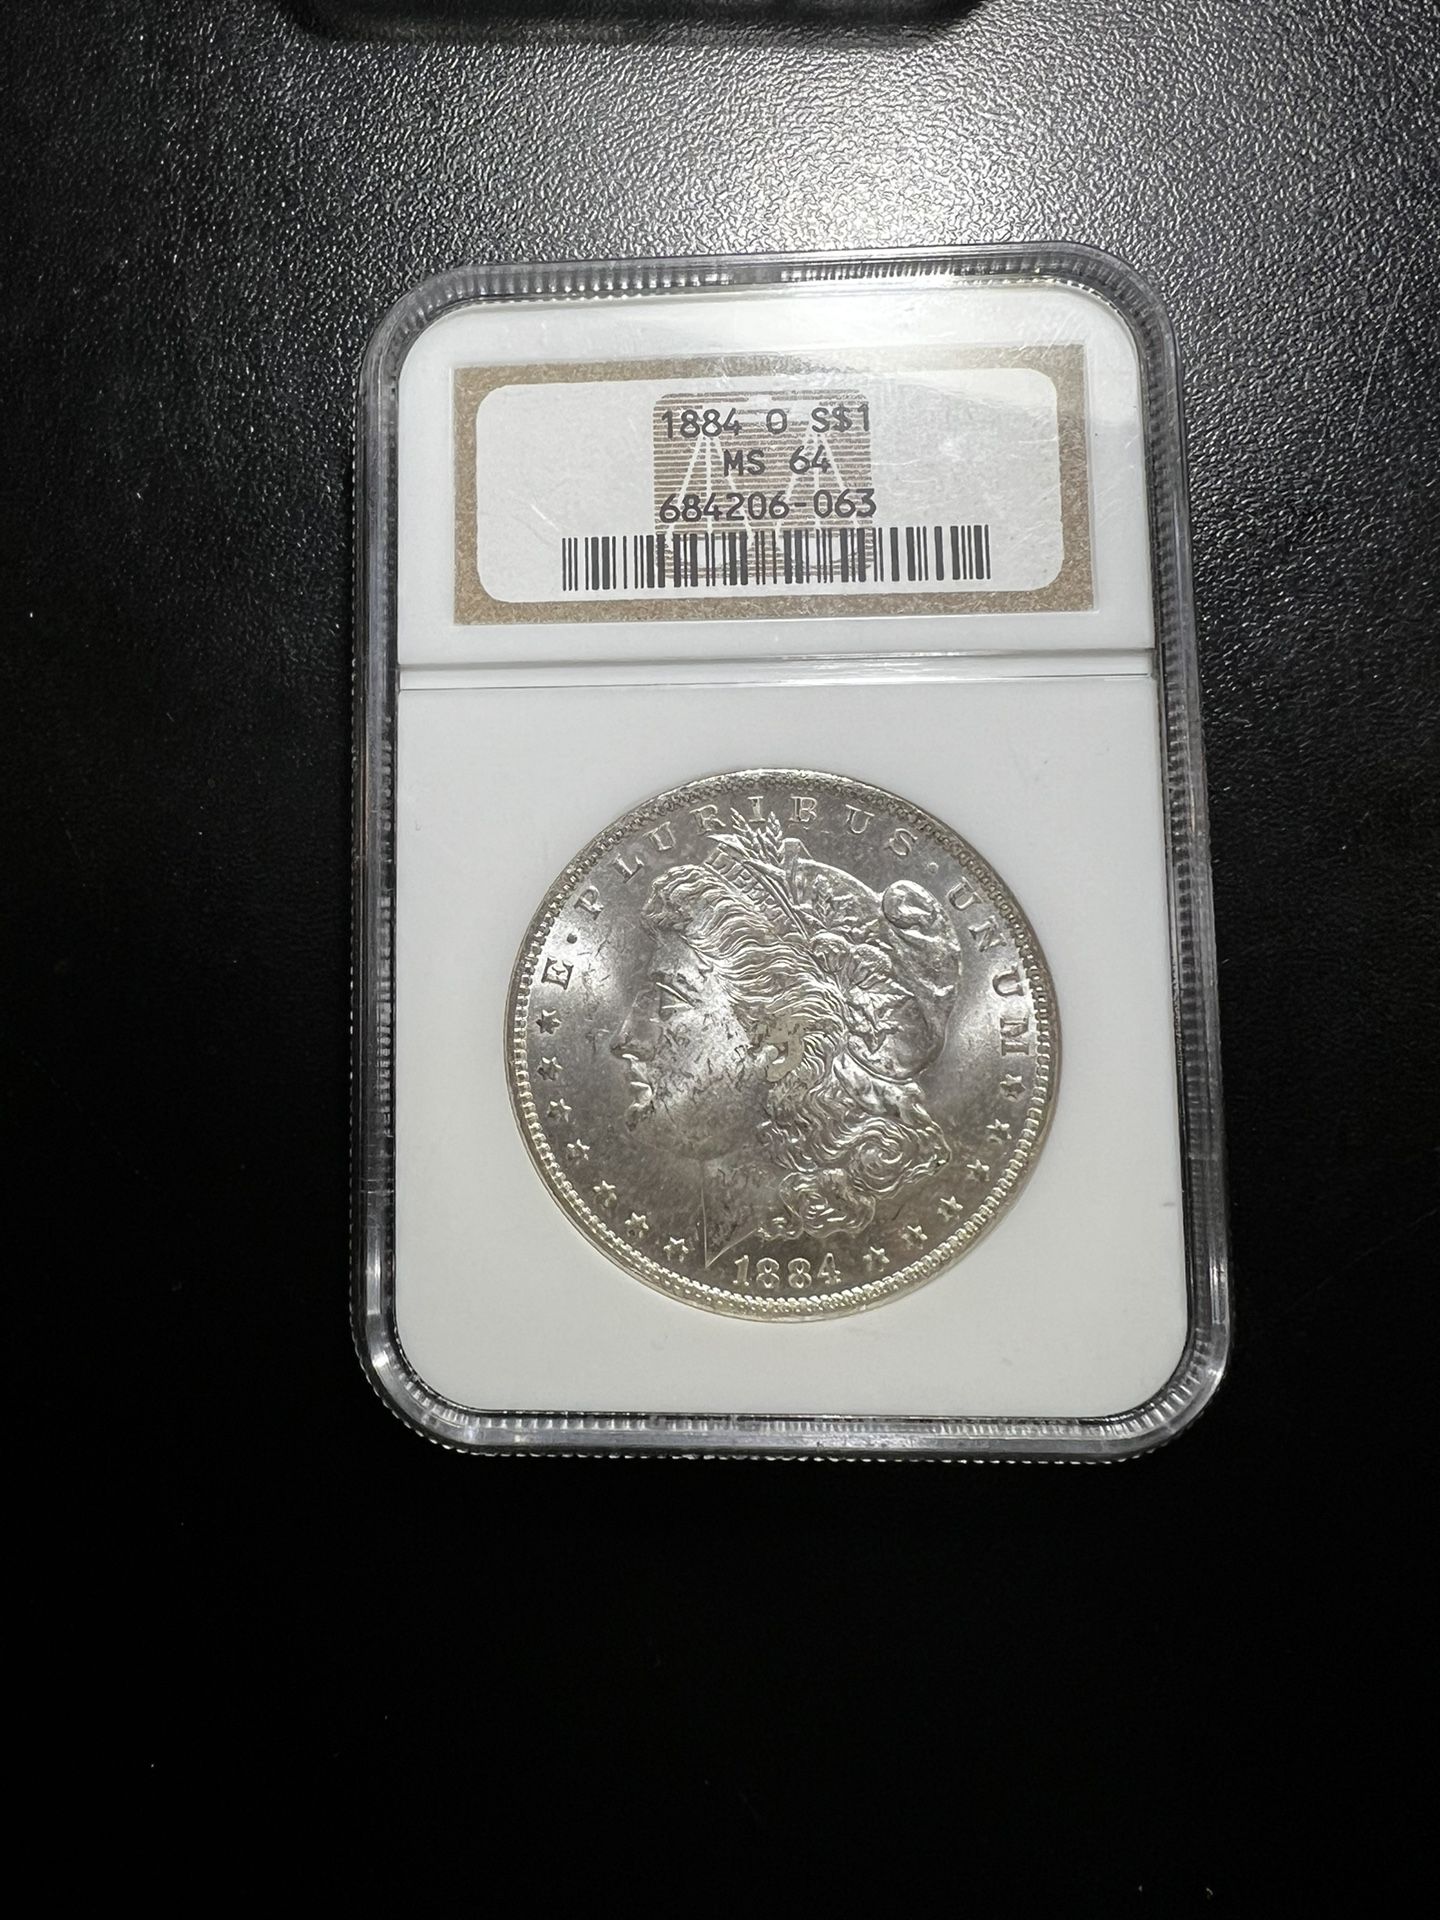 MS 64 NGC Morgan Silver Dollar